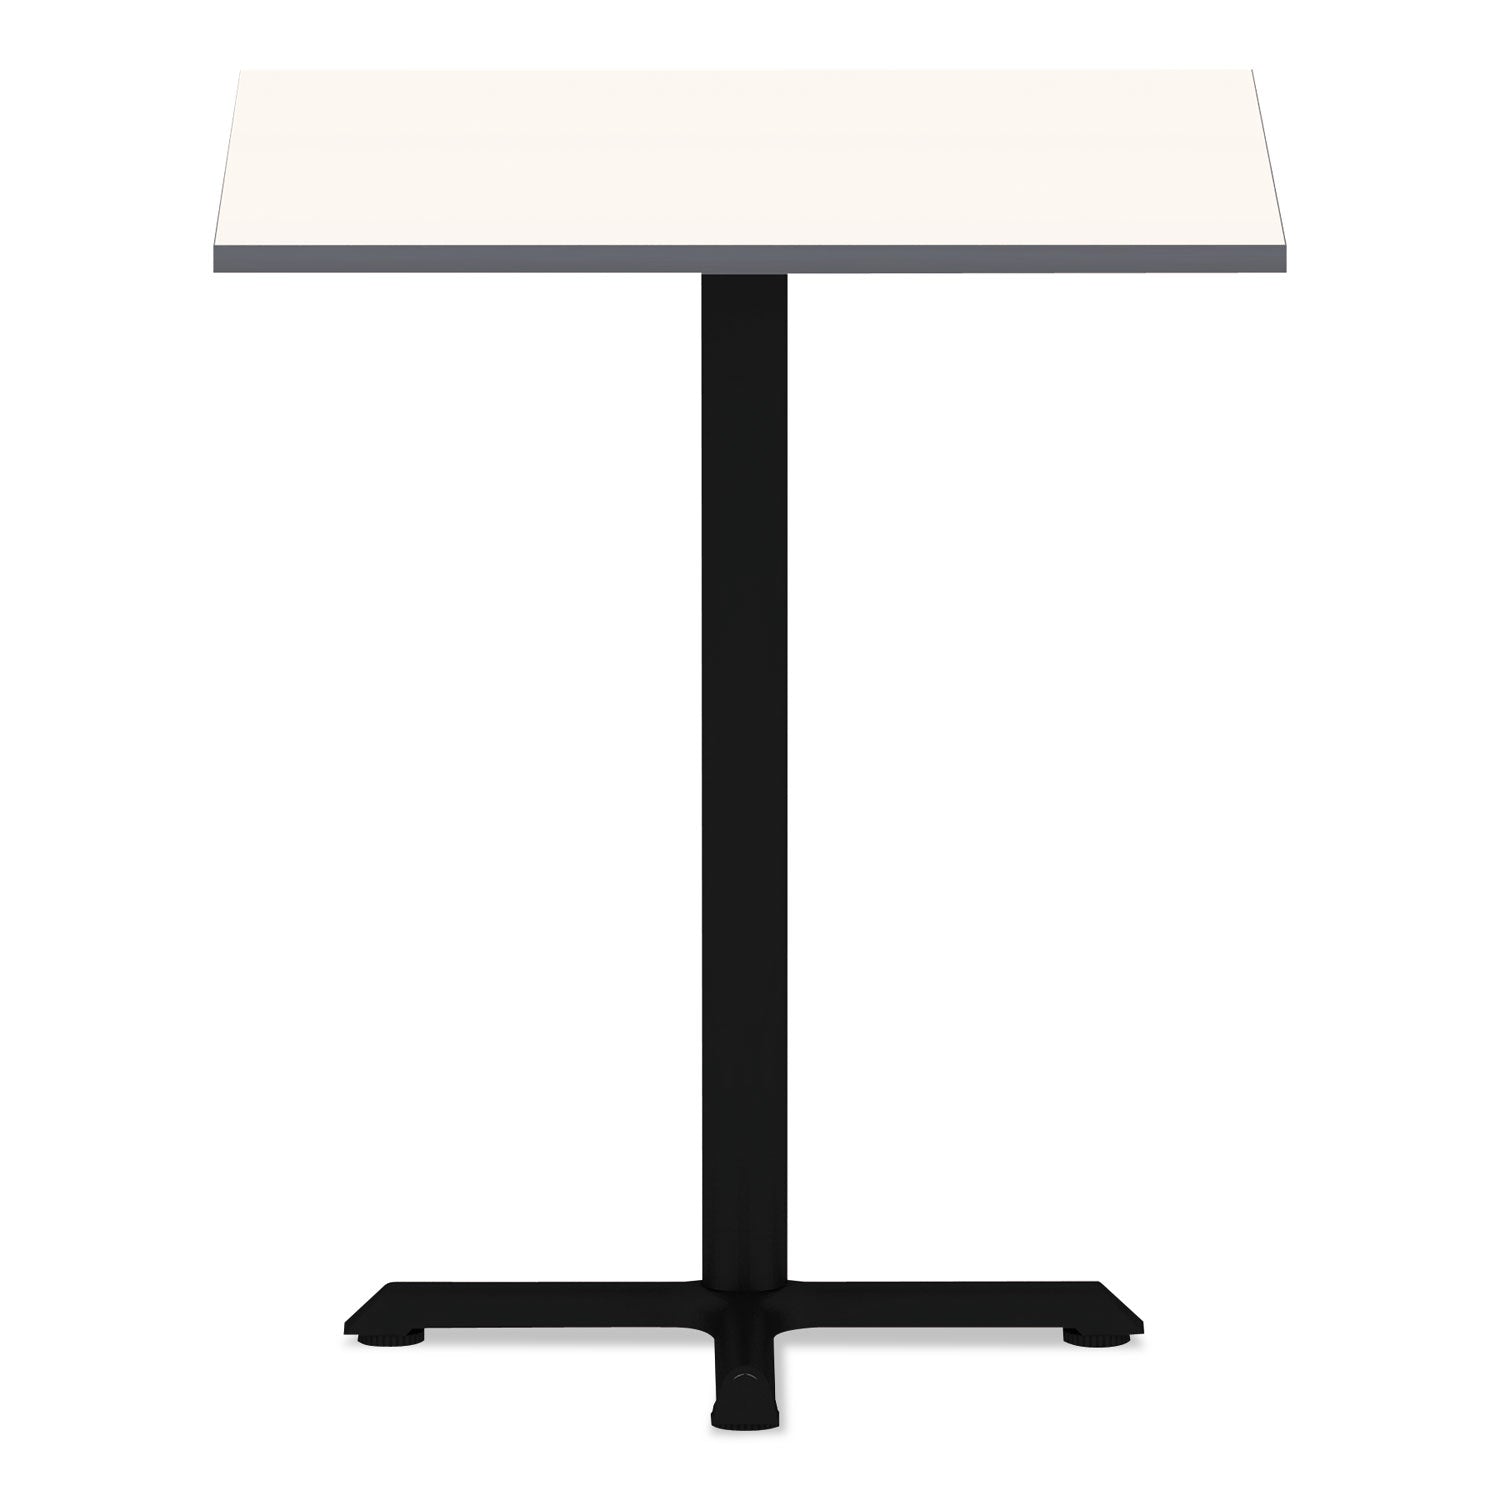 reversible-laminate-table-top-square-3538w-x-3538d-white-gray_alettsq36wg - 4